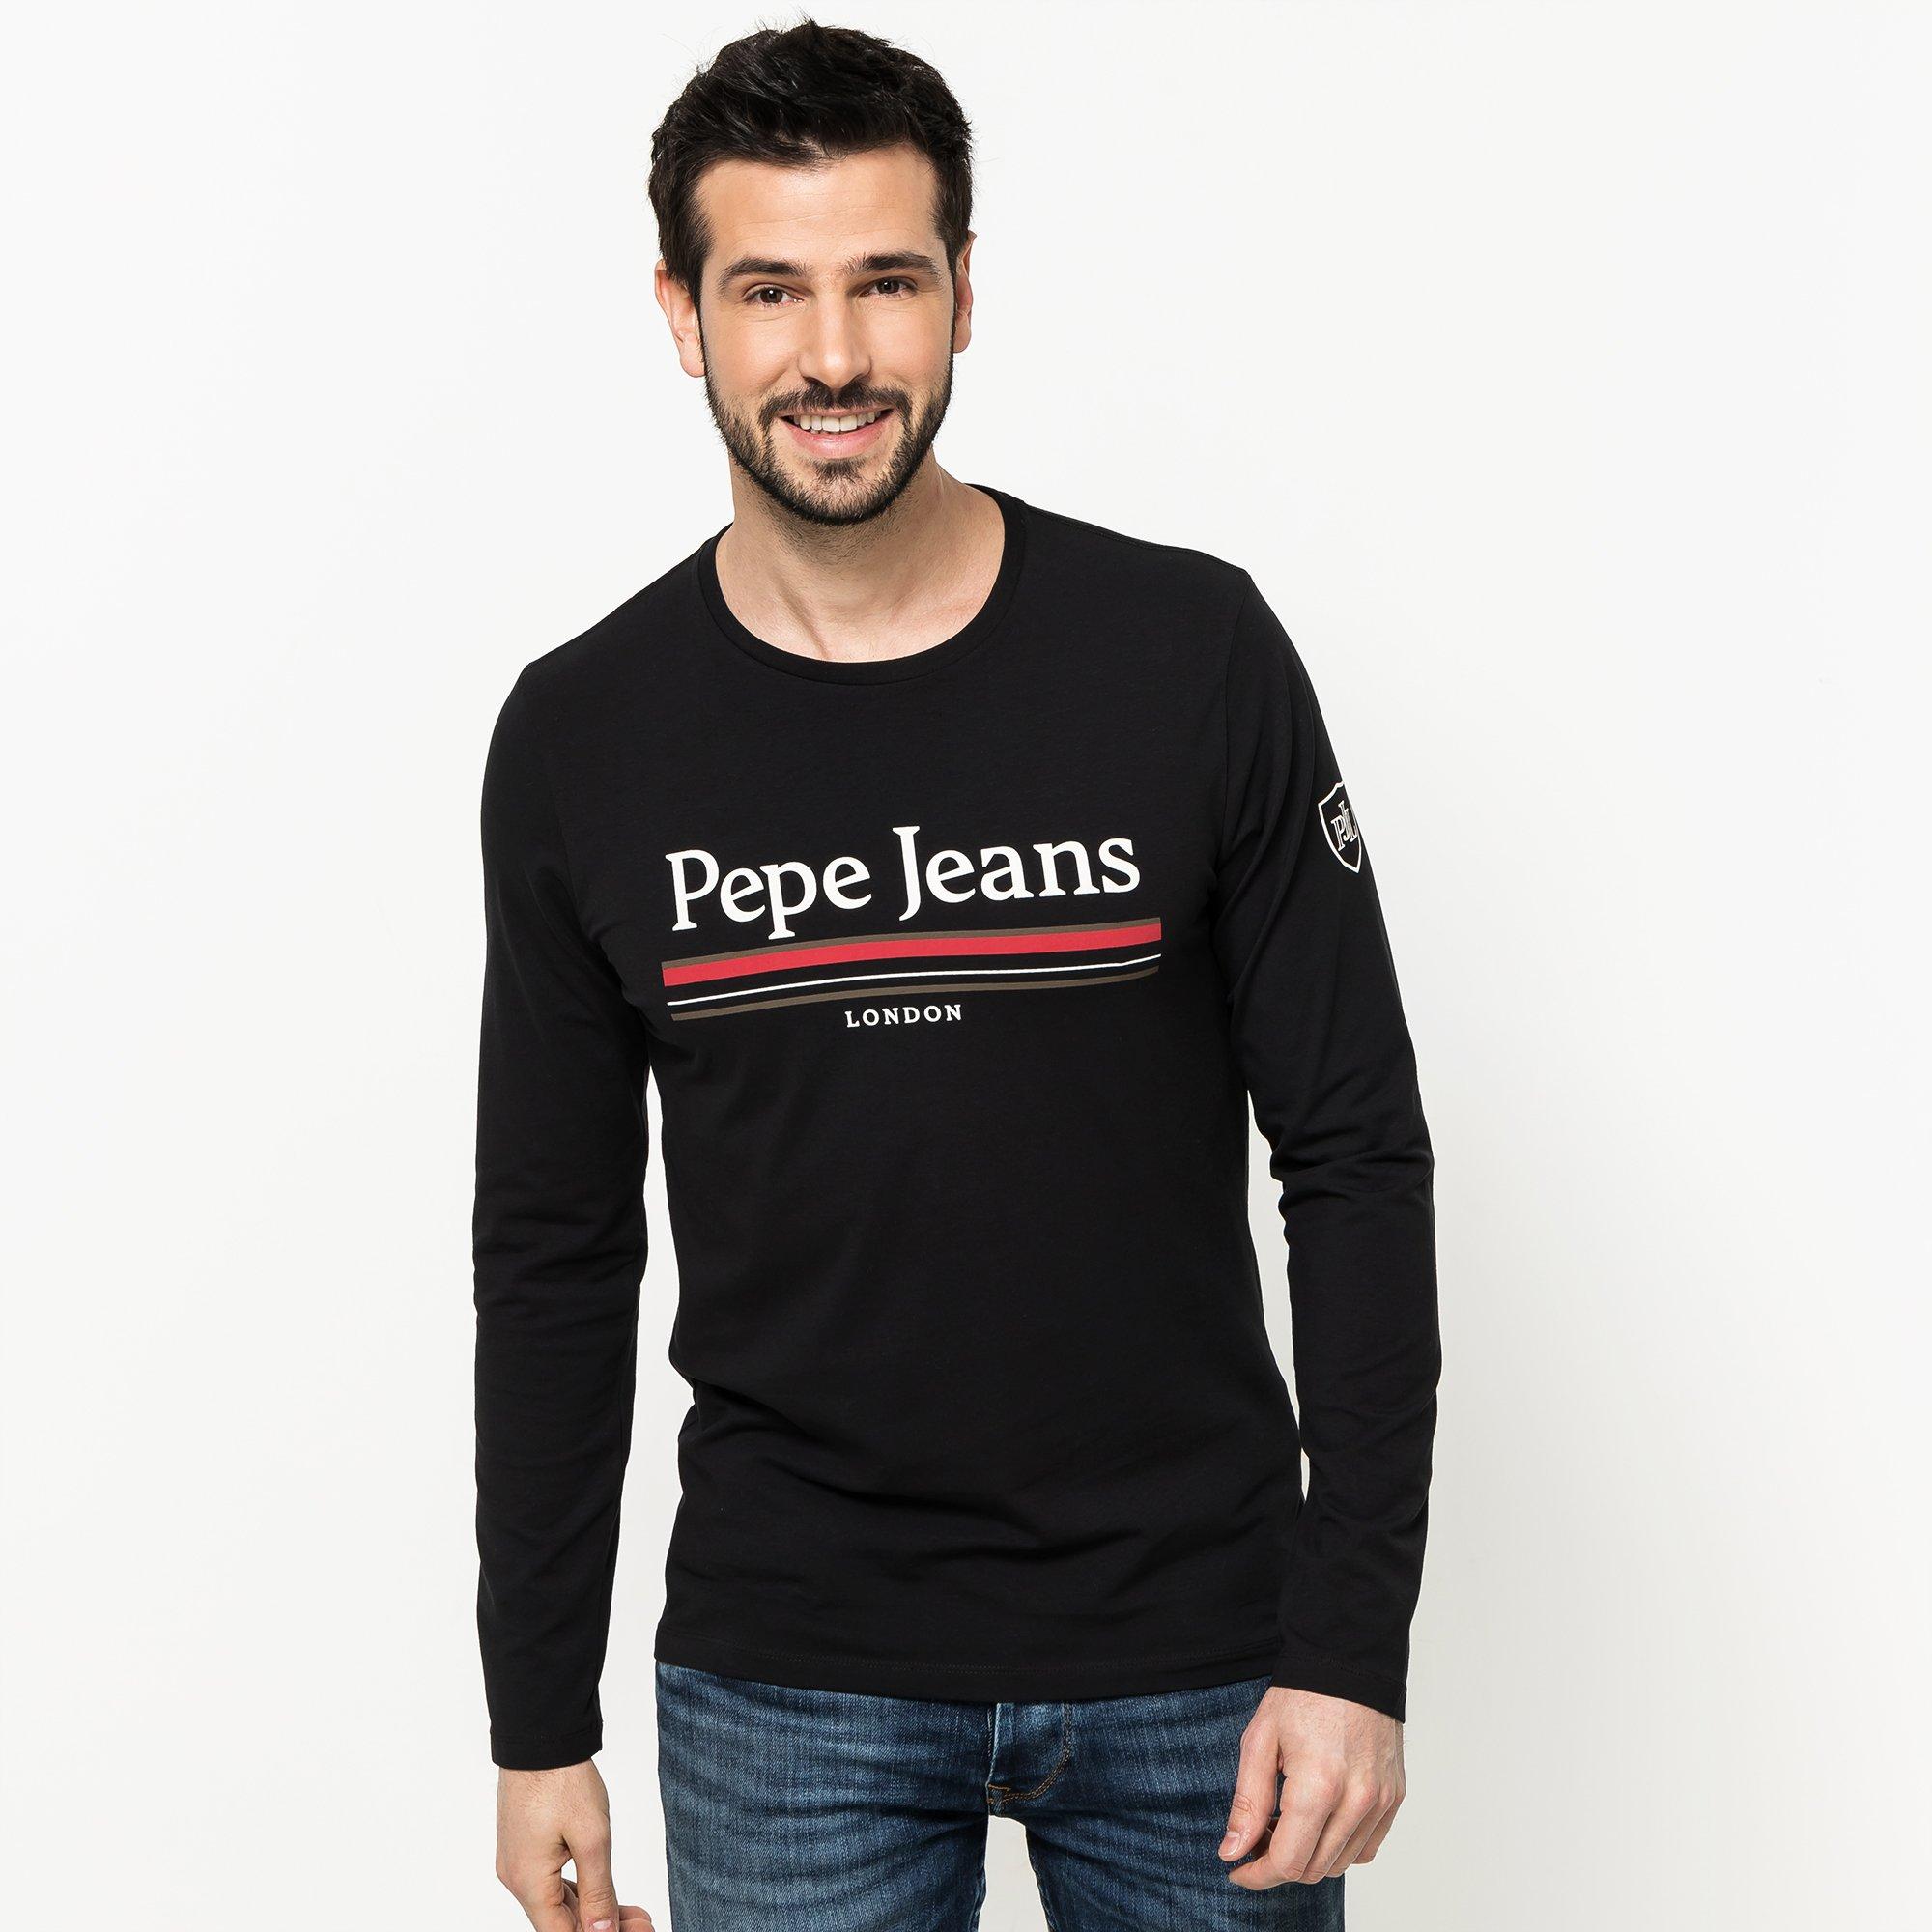 Pepe Jeans T-Shirt lange Aermel T-Shirt 